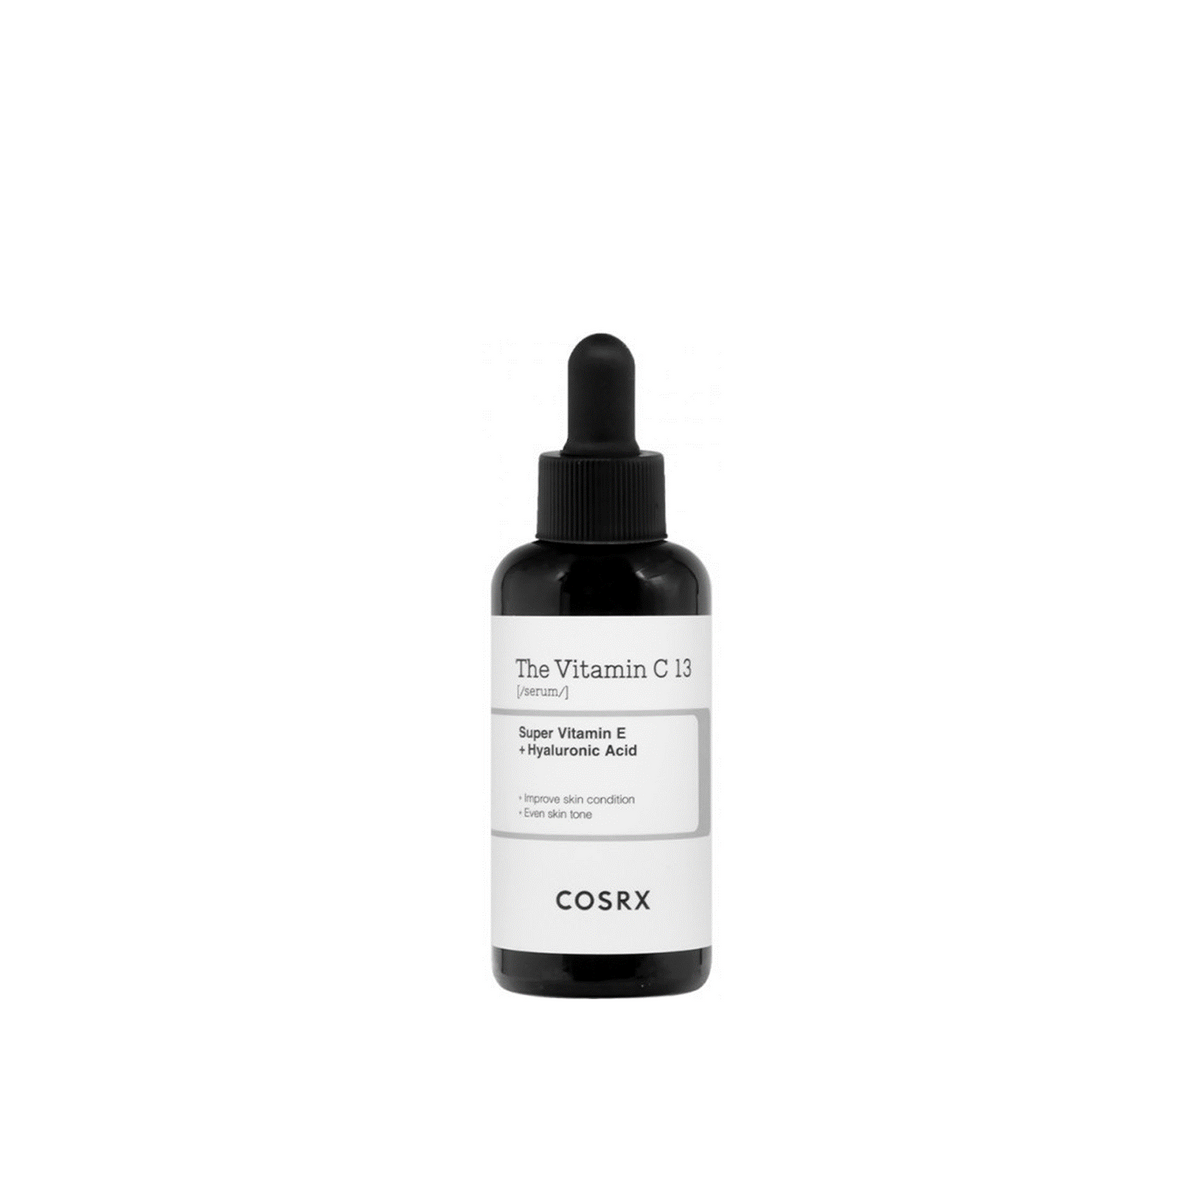 Cosrx The Vitamin C 13 Serum/20Ml